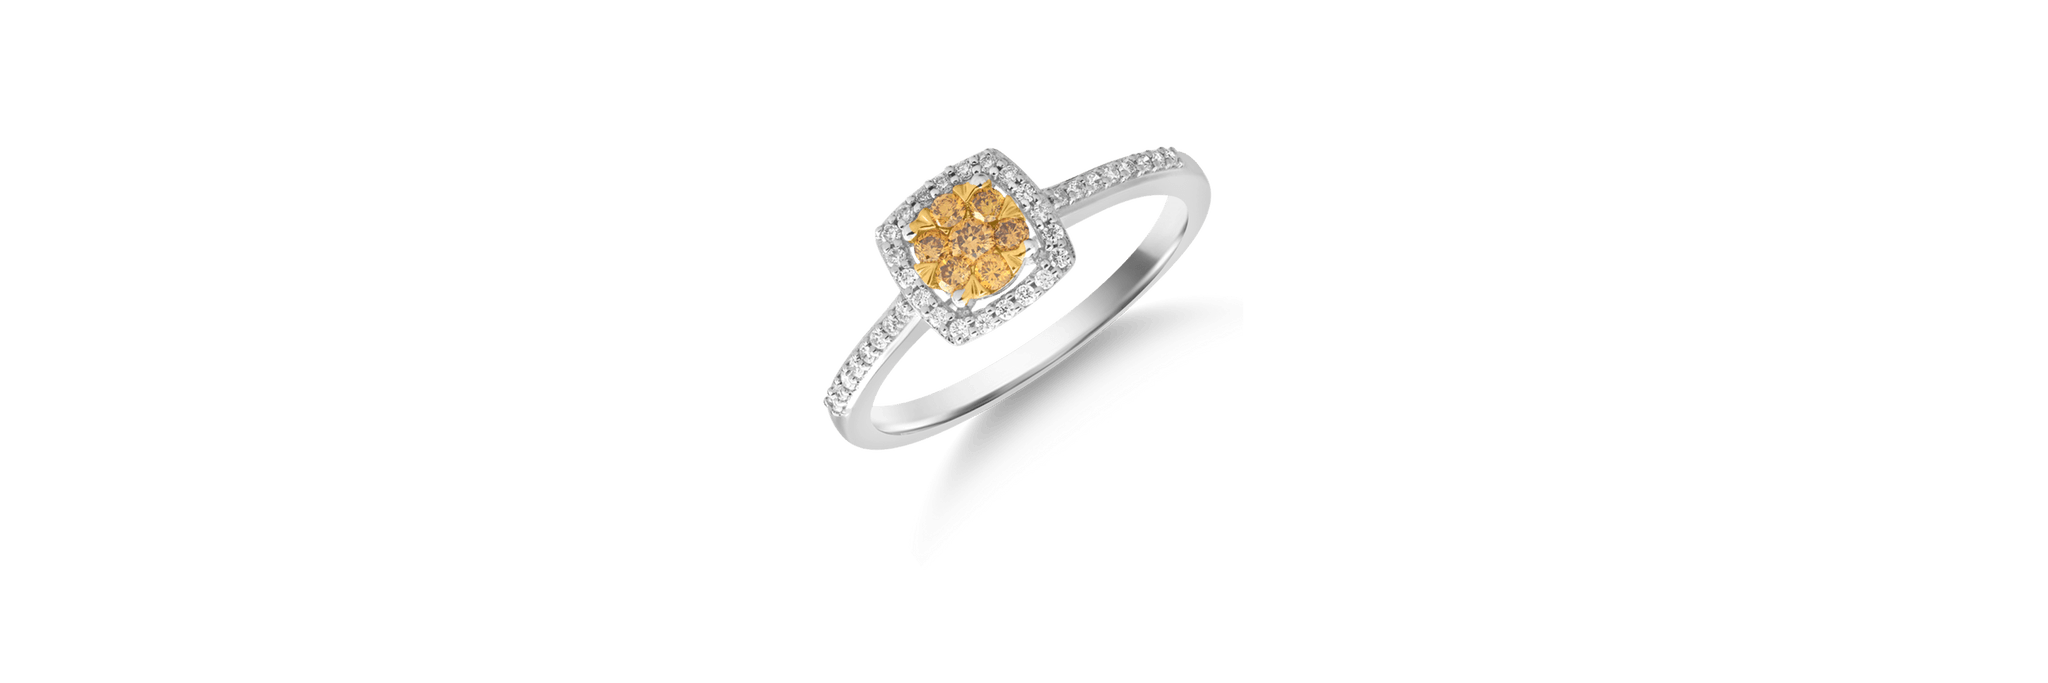 Inel din aur alb-galben de 14K cu fancy diamonds de 0.161ct si diamante de 0.128ct